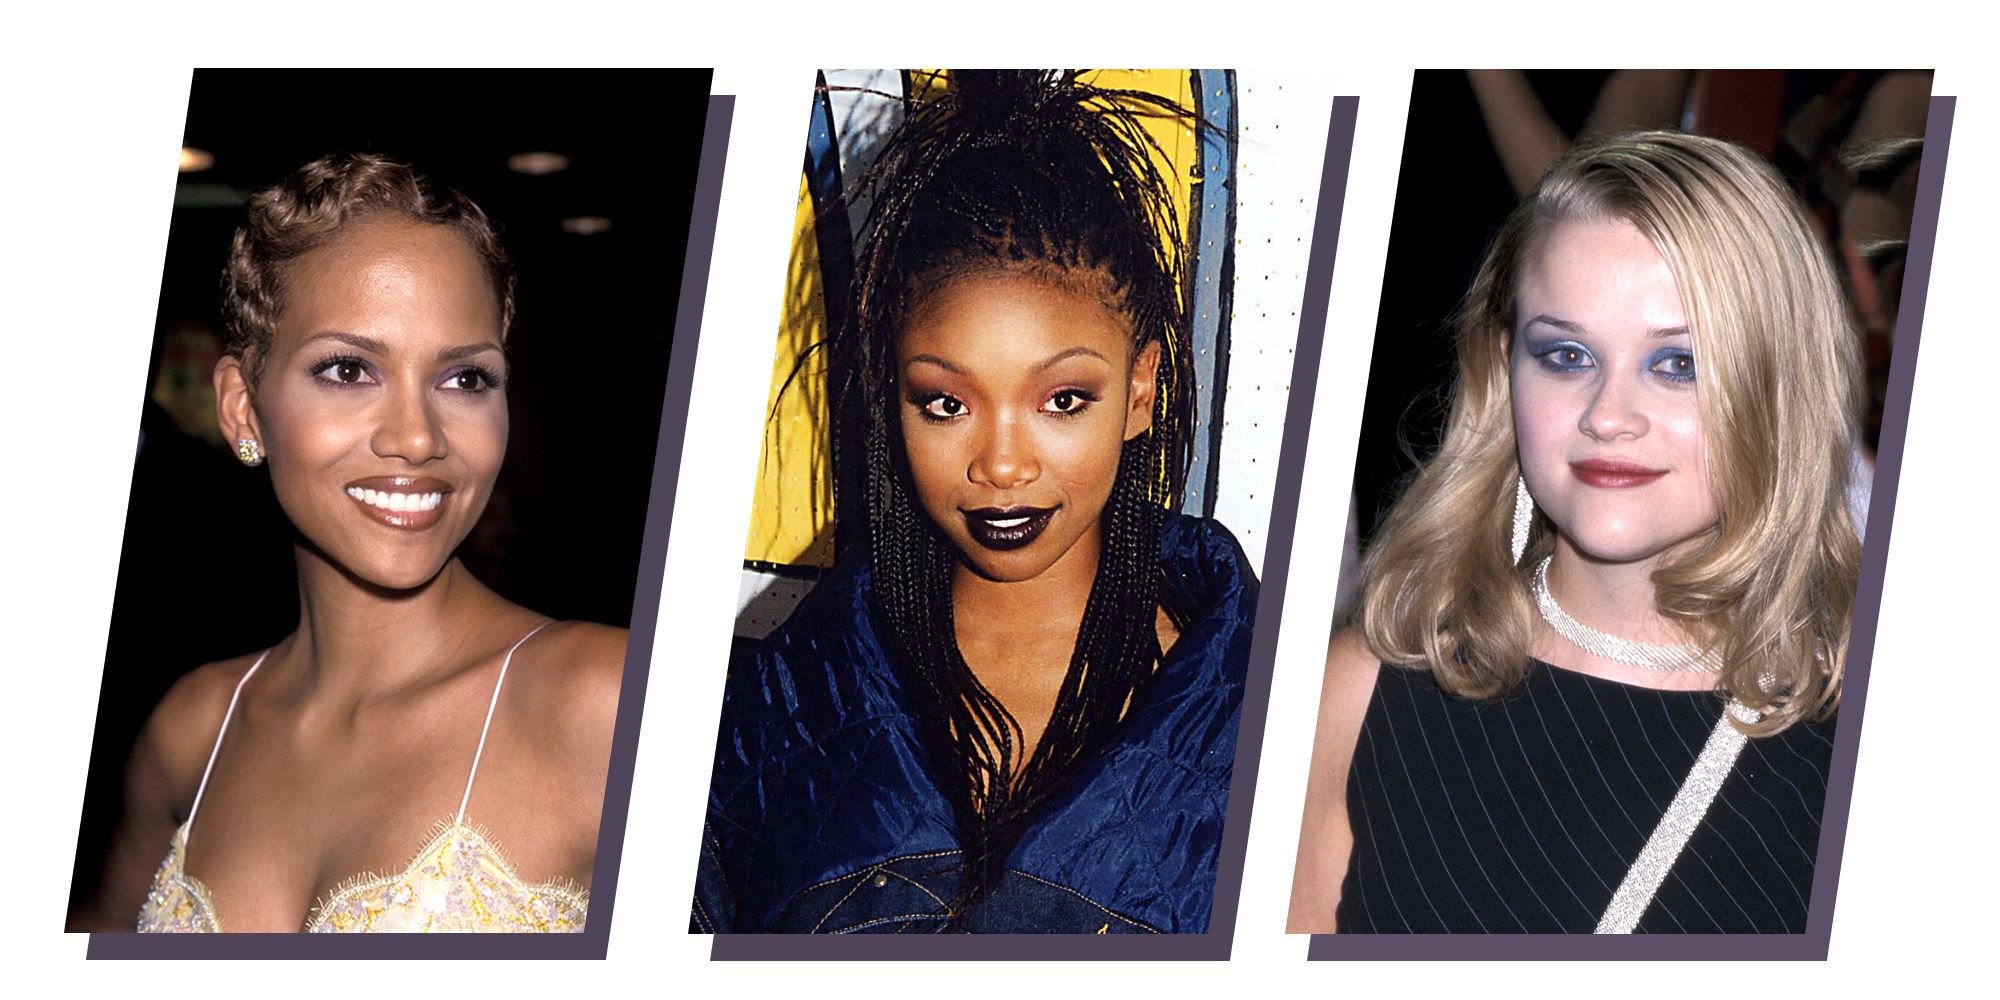 10 Best 90s Makeup Trends In 2018 Grunge Makeup Ideas To Get That 90s Look